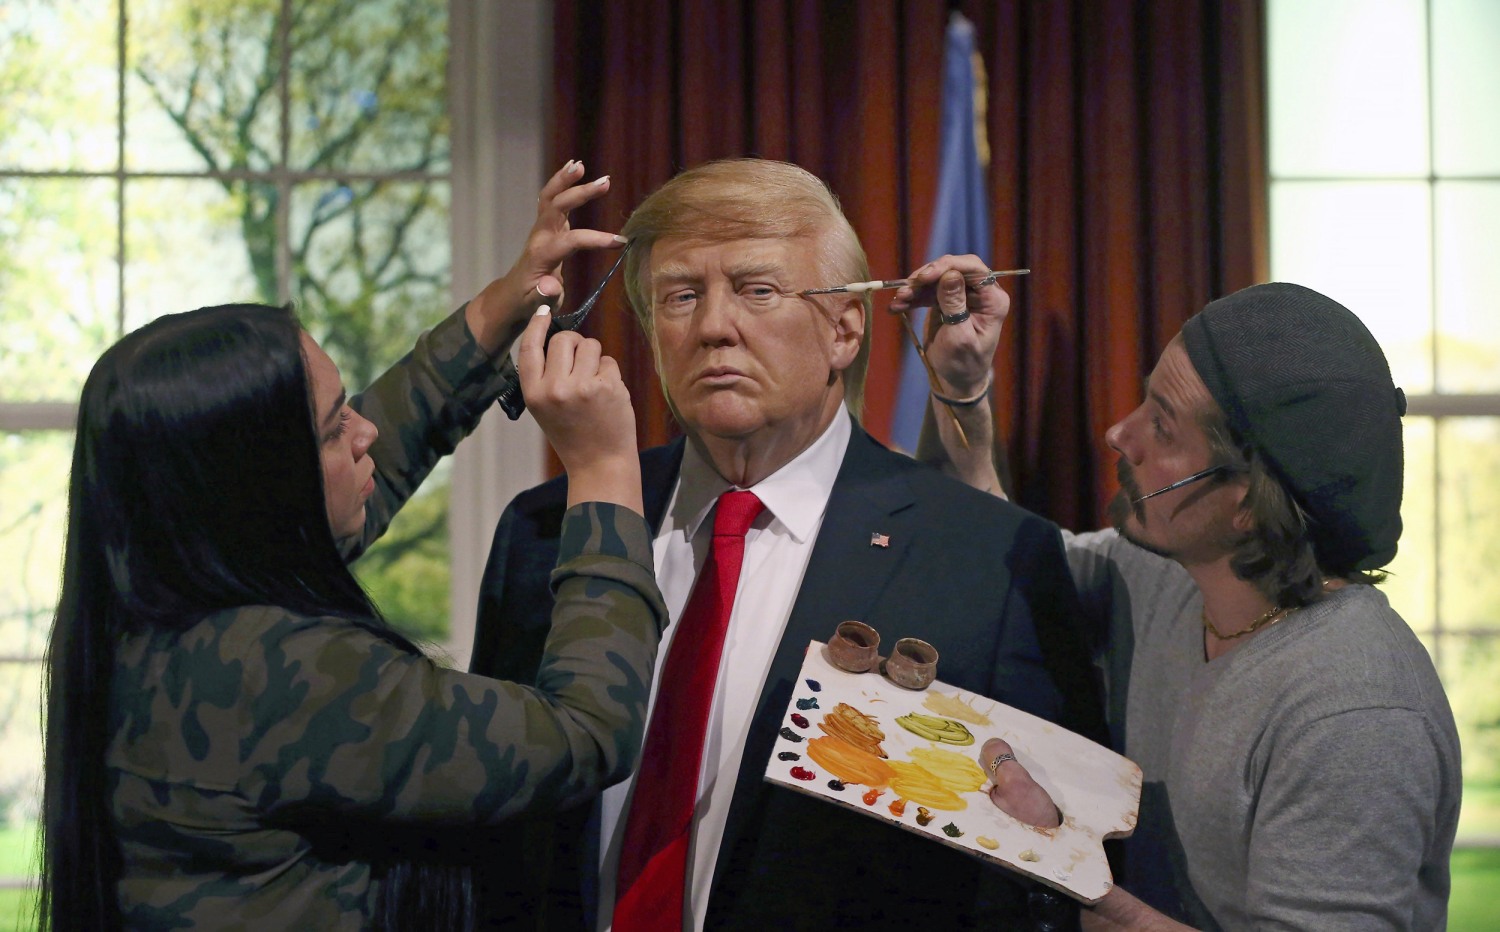 Wax museum unveils Trump replica